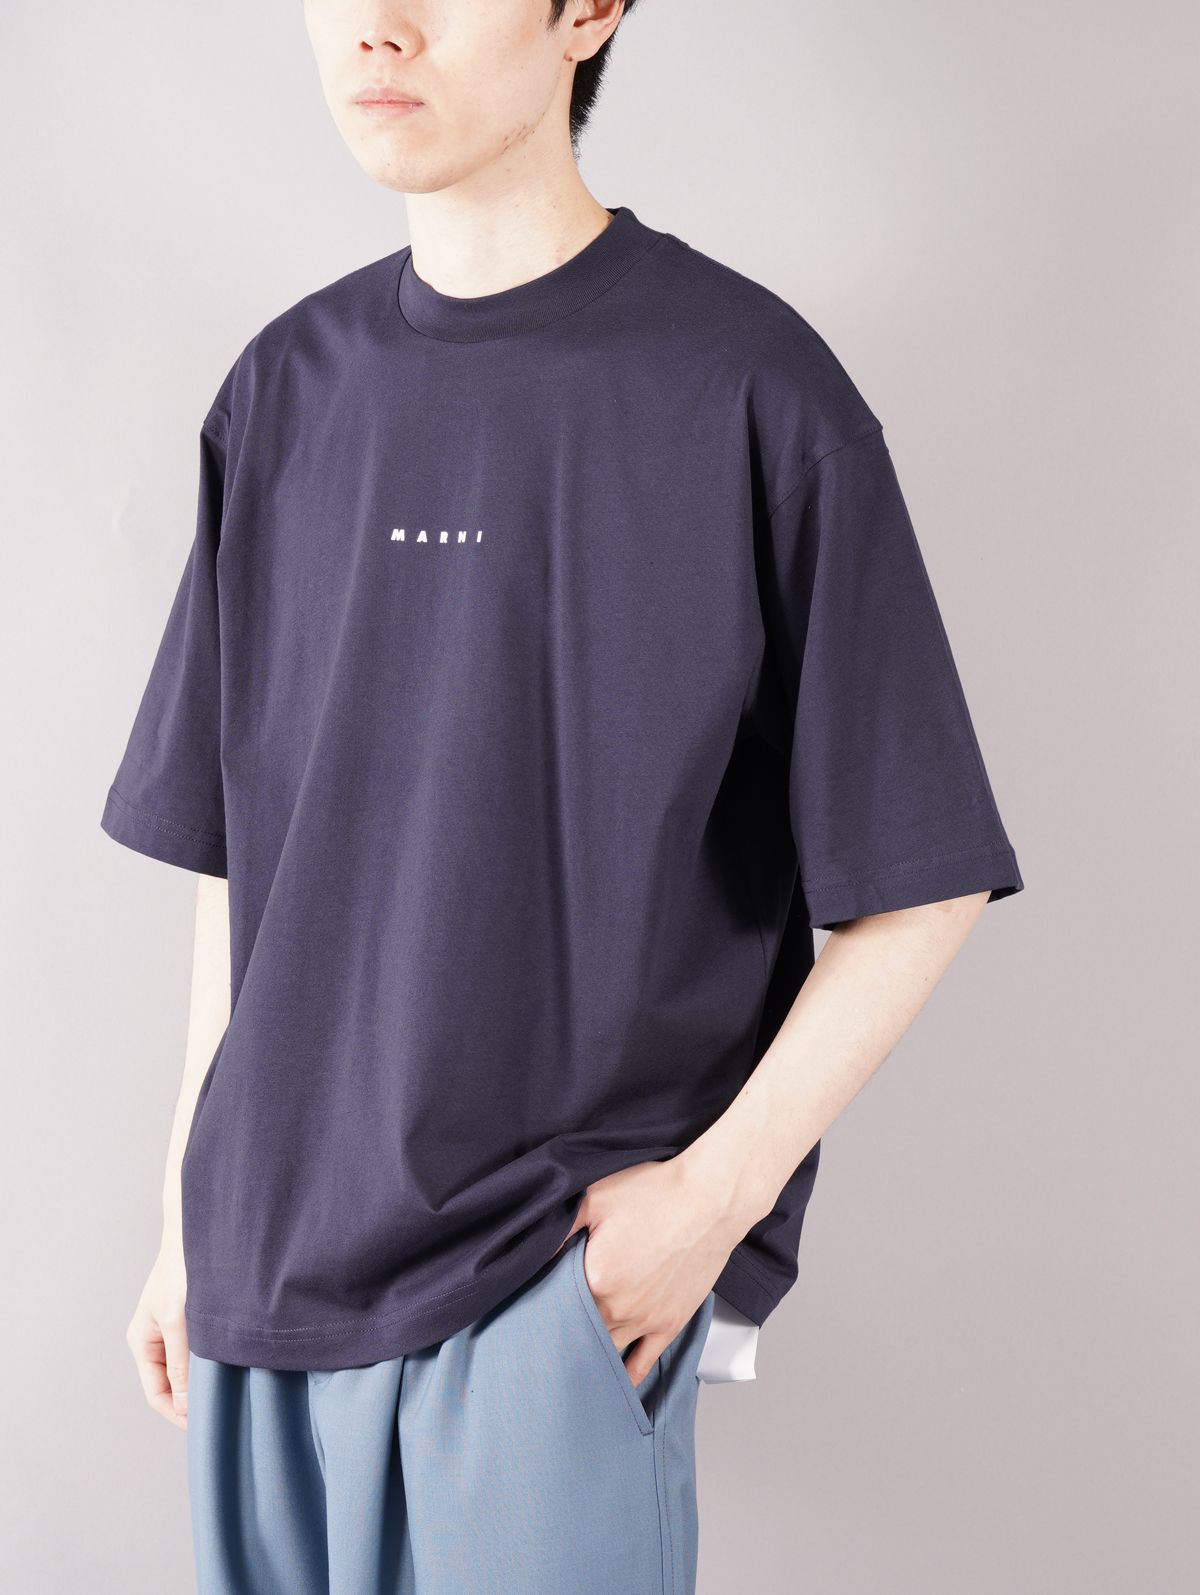 MARNI - LOGO T-SHIRT / ロゴ Tシャツ / オーバーサイズ / ホワイト 